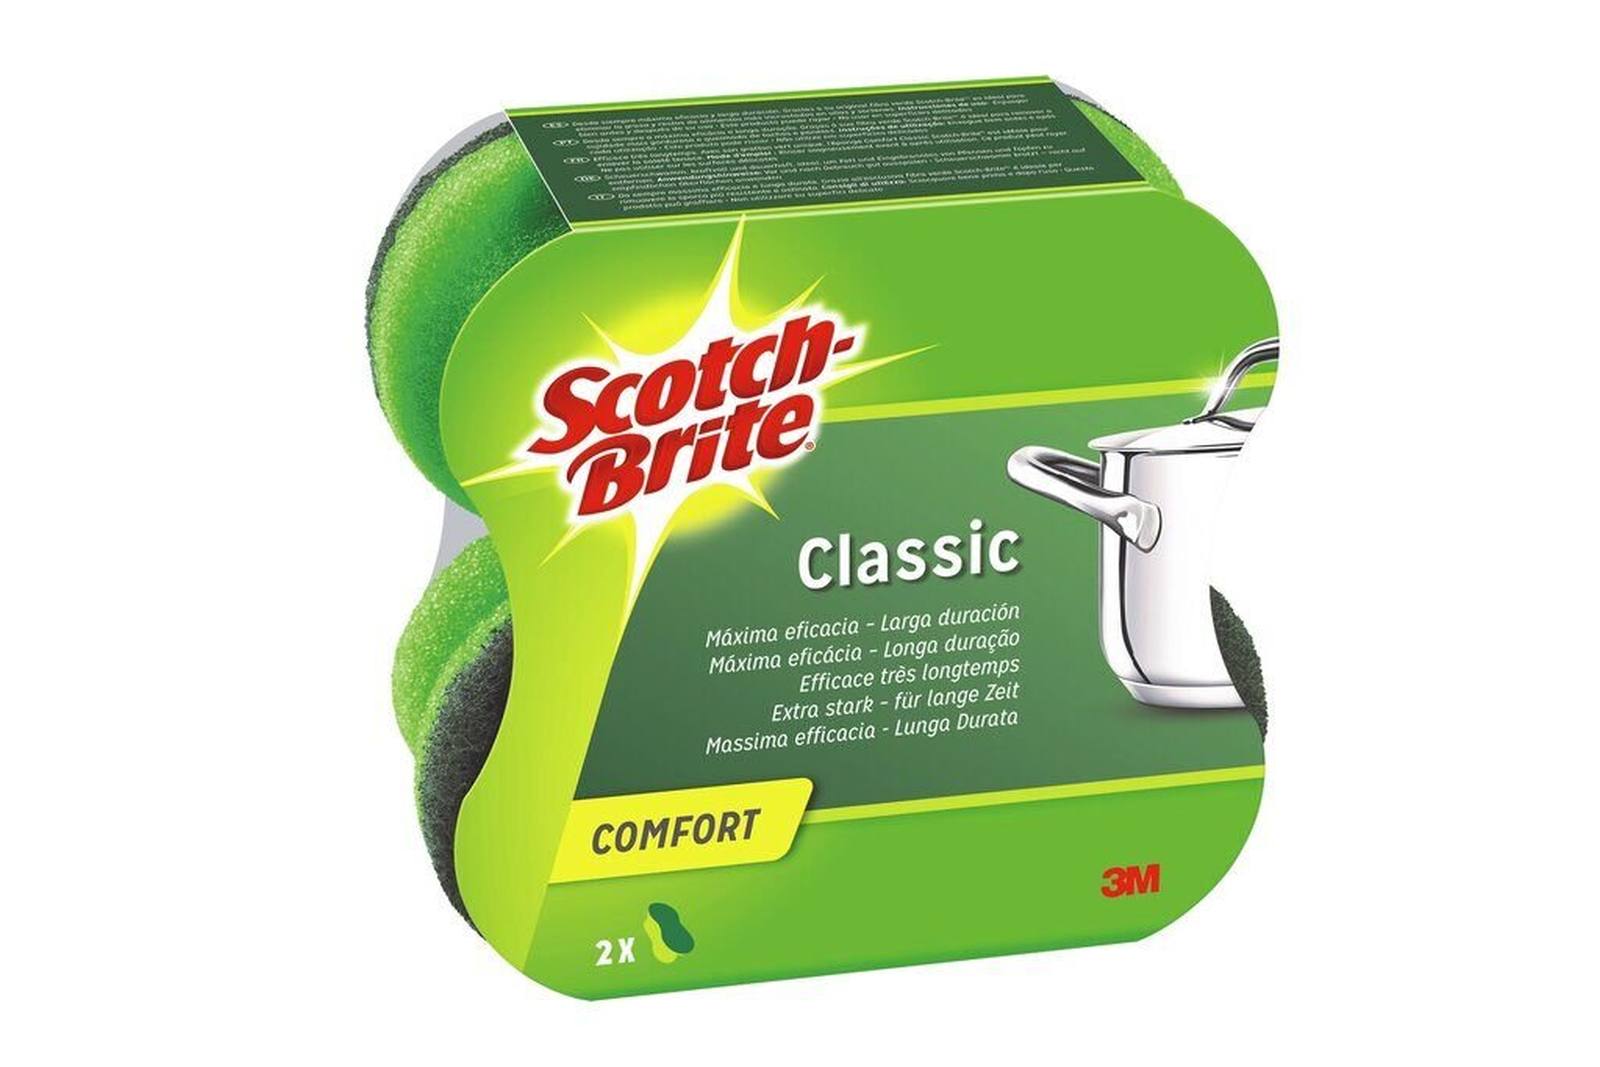 3M Scotch-Brite Classic Komfort-Reinigungsschwamm extra stark CLCNS2, grün-grün, 2 Stück